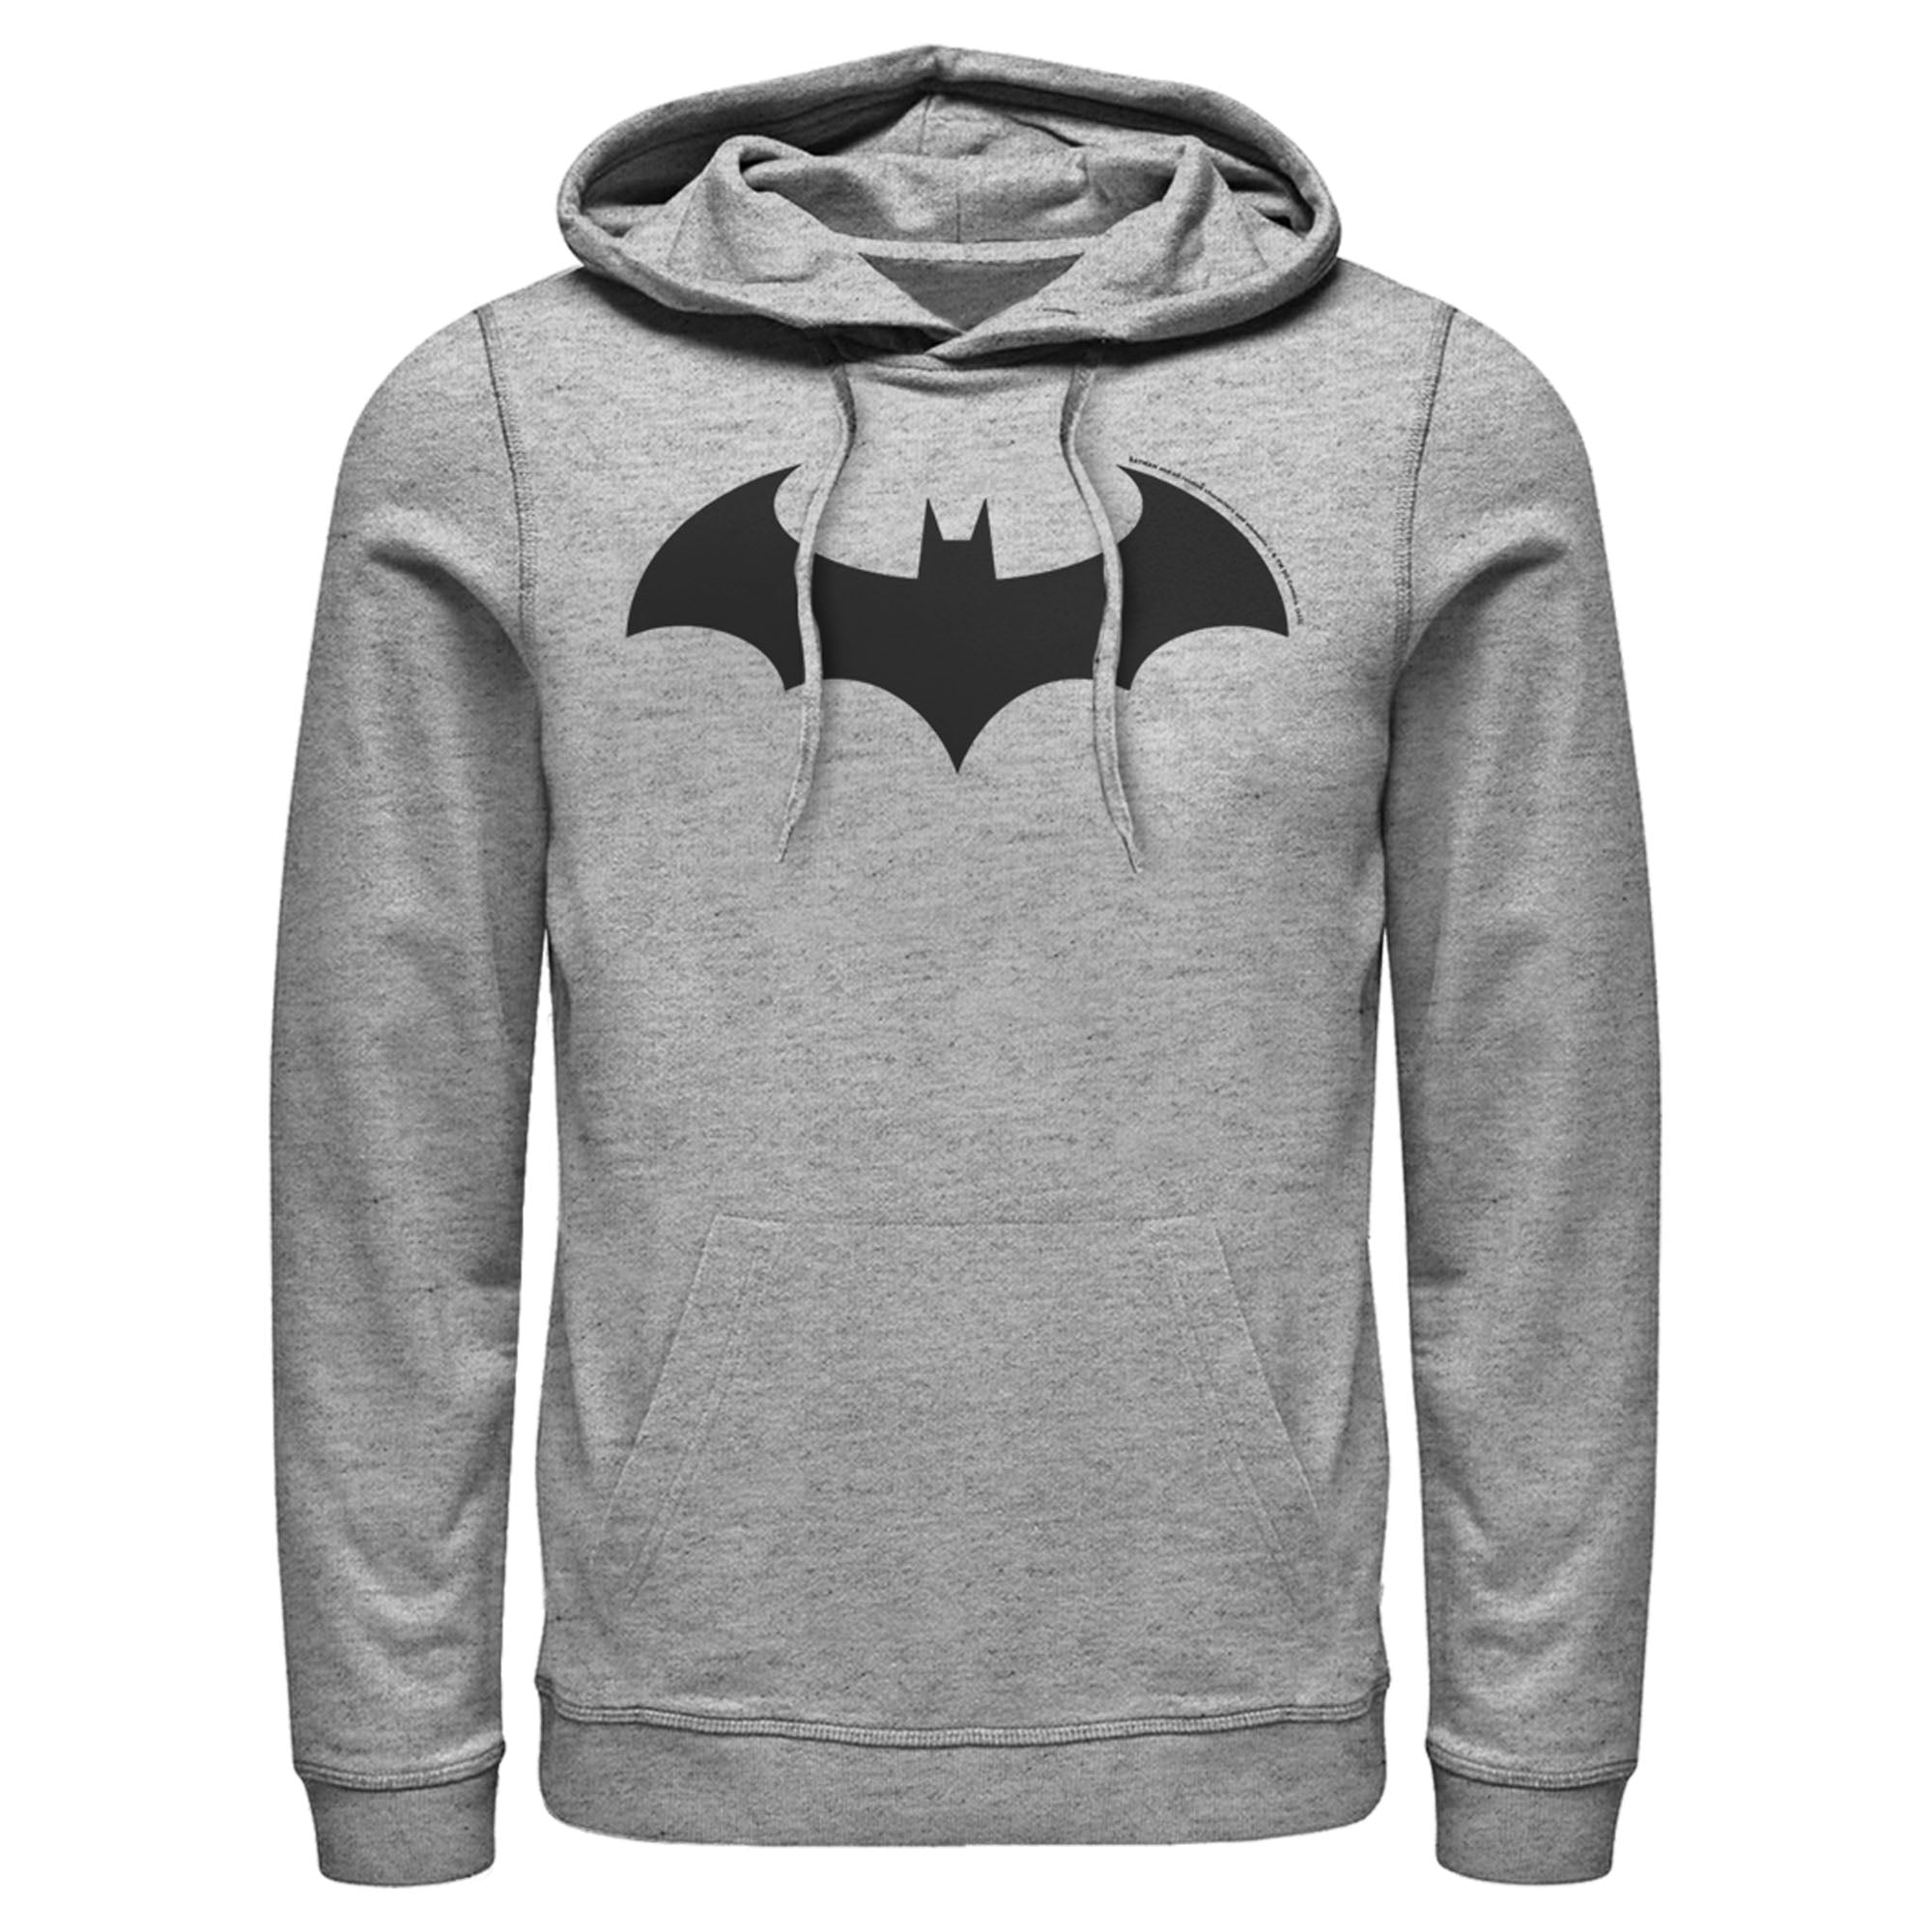 Batman Dark Knight Movie DC Comics Justice League Pullover Hoodie Sweatshirt New 